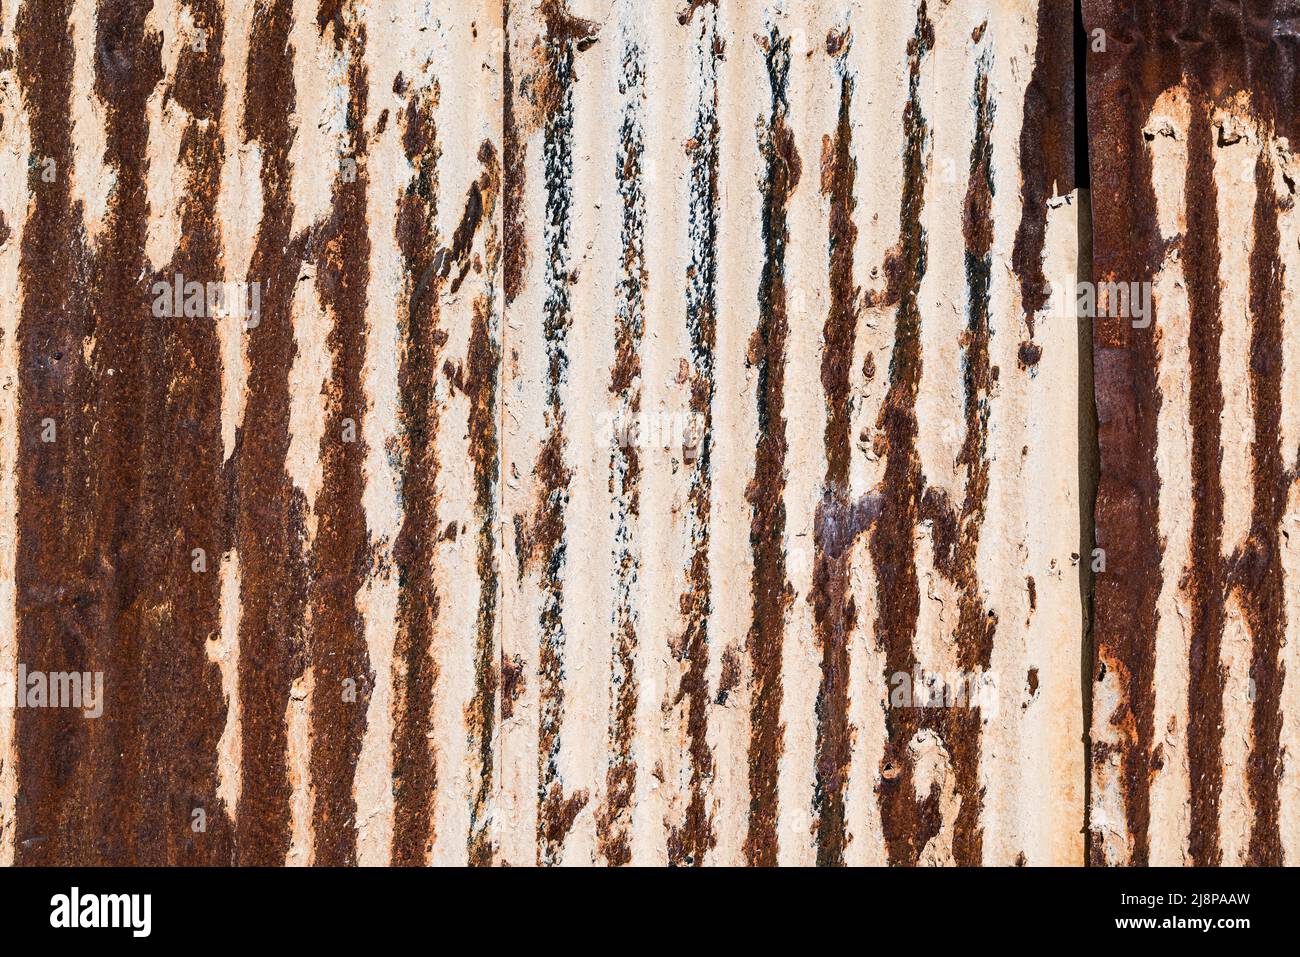 Viejo fondo de chapa de acero corrugado oxidado Foto de stock